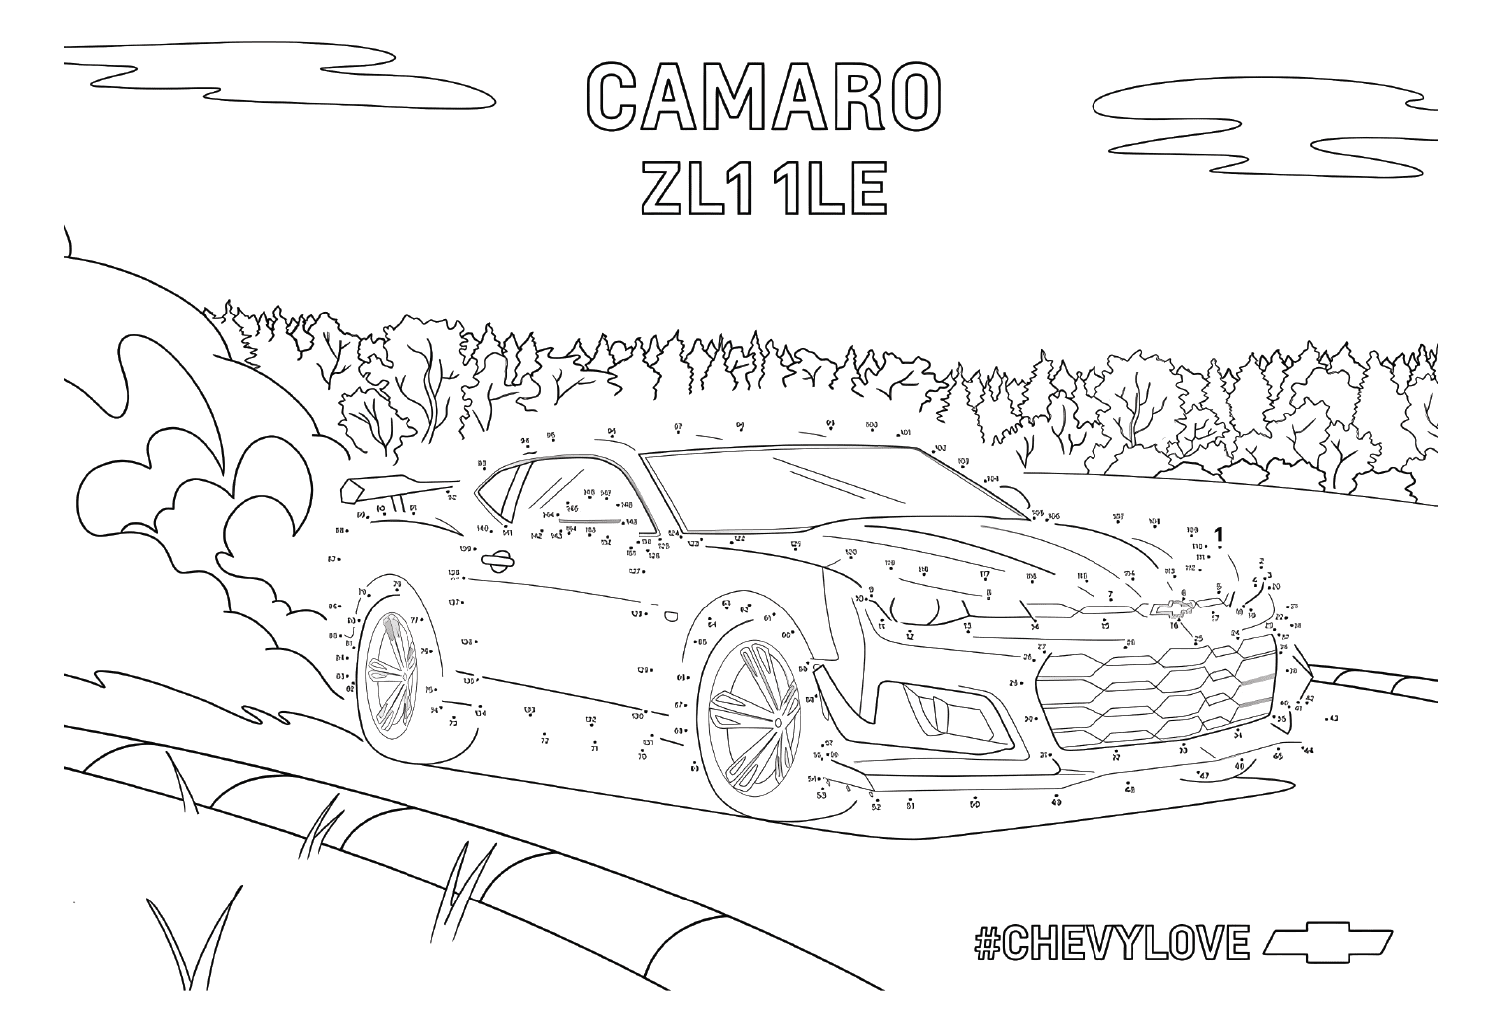 Desenho para colorir do Chevrolet Camaro ZL11LE da Chevrolet